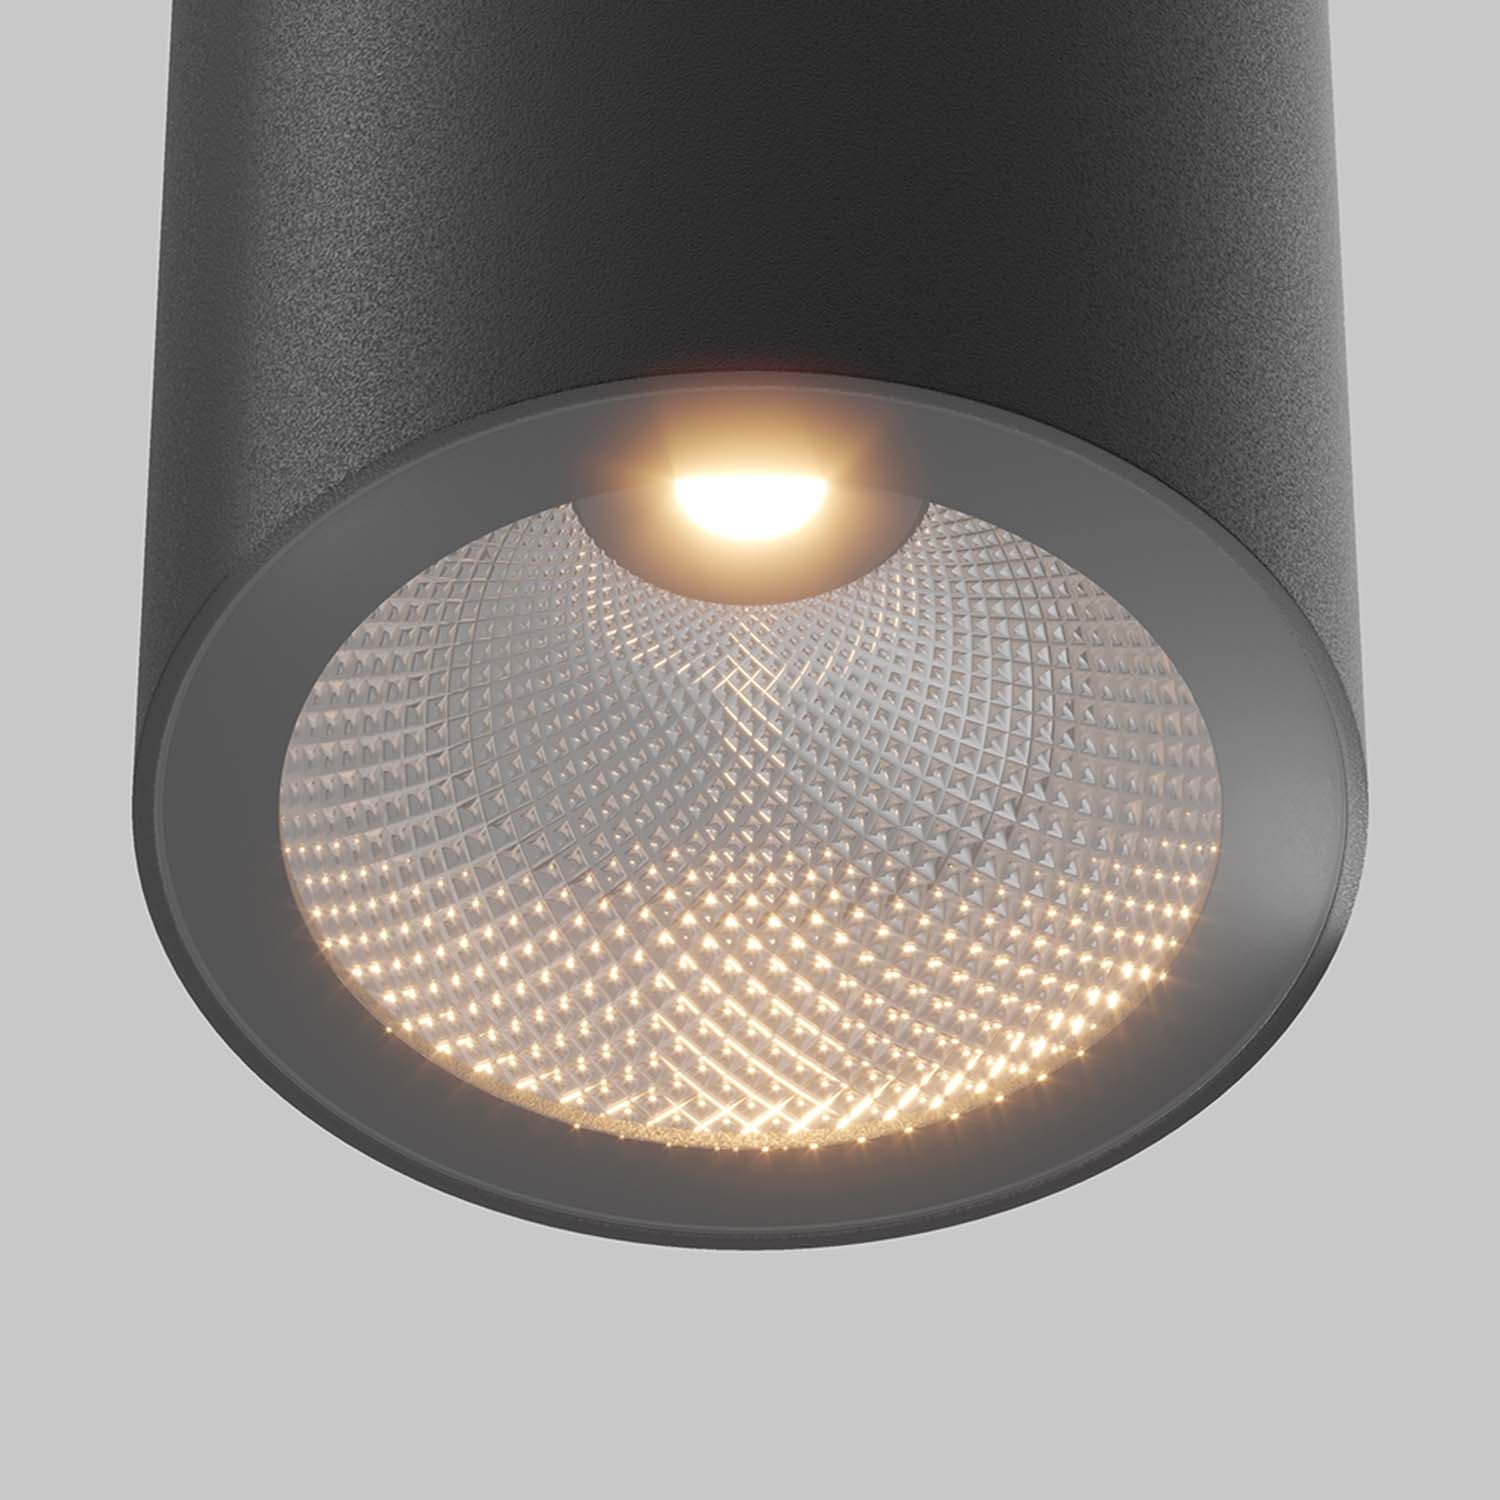 ROLL - Design waterproof black surface-mounted spotlight, outdoor or bathroom